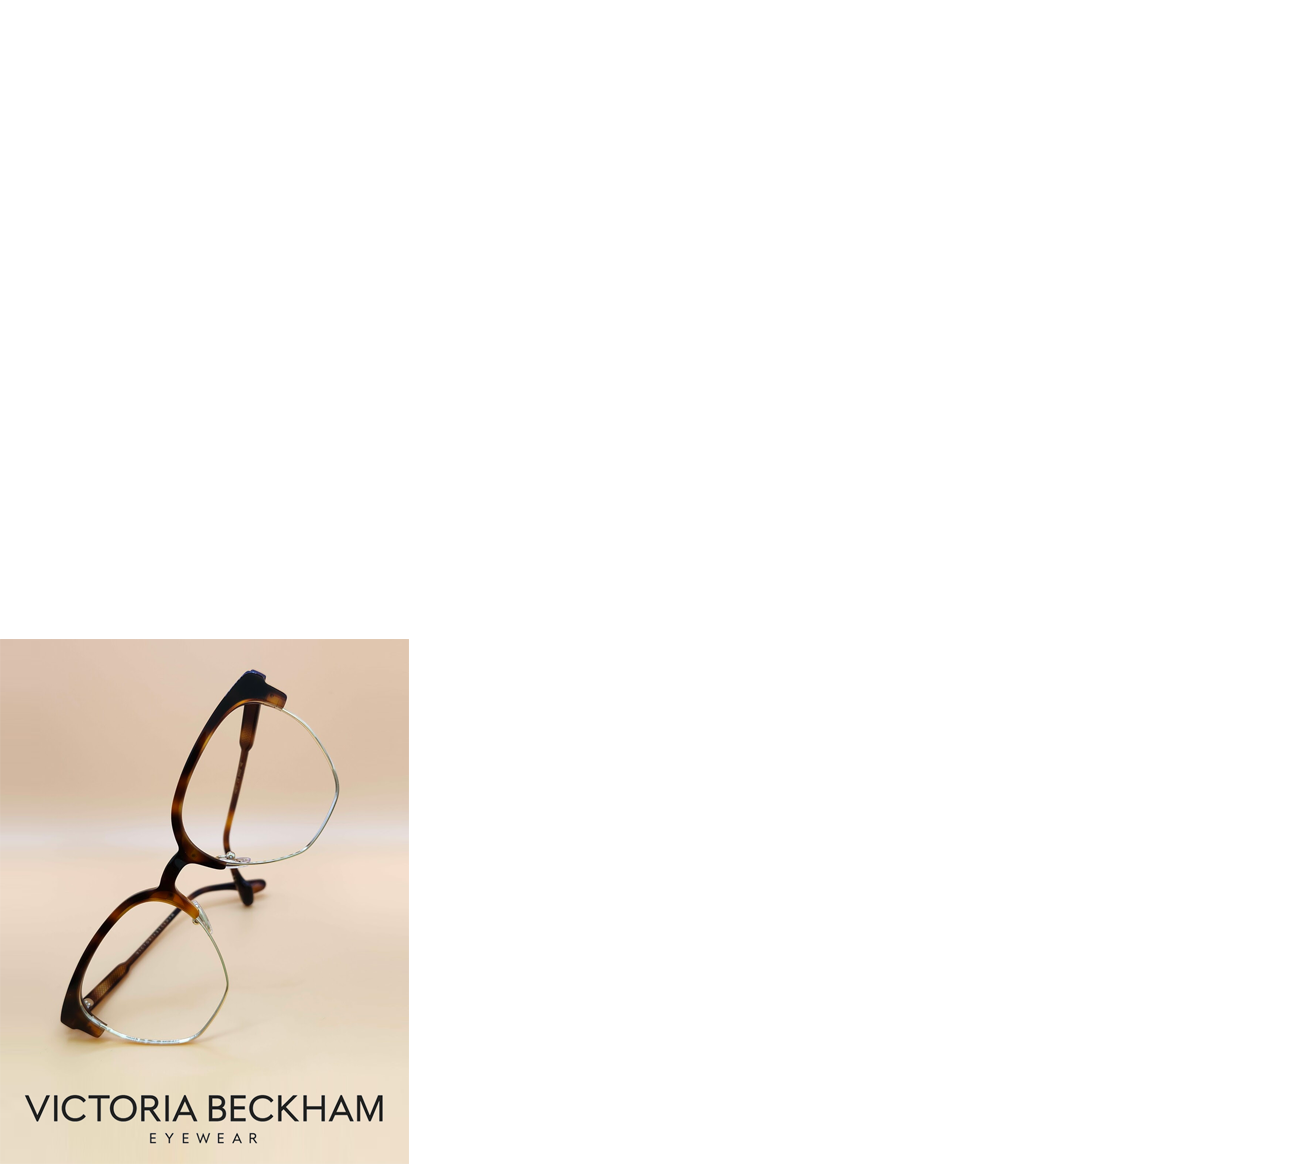 Victoria Beckham Eyewear - OptoDoc Homepage image